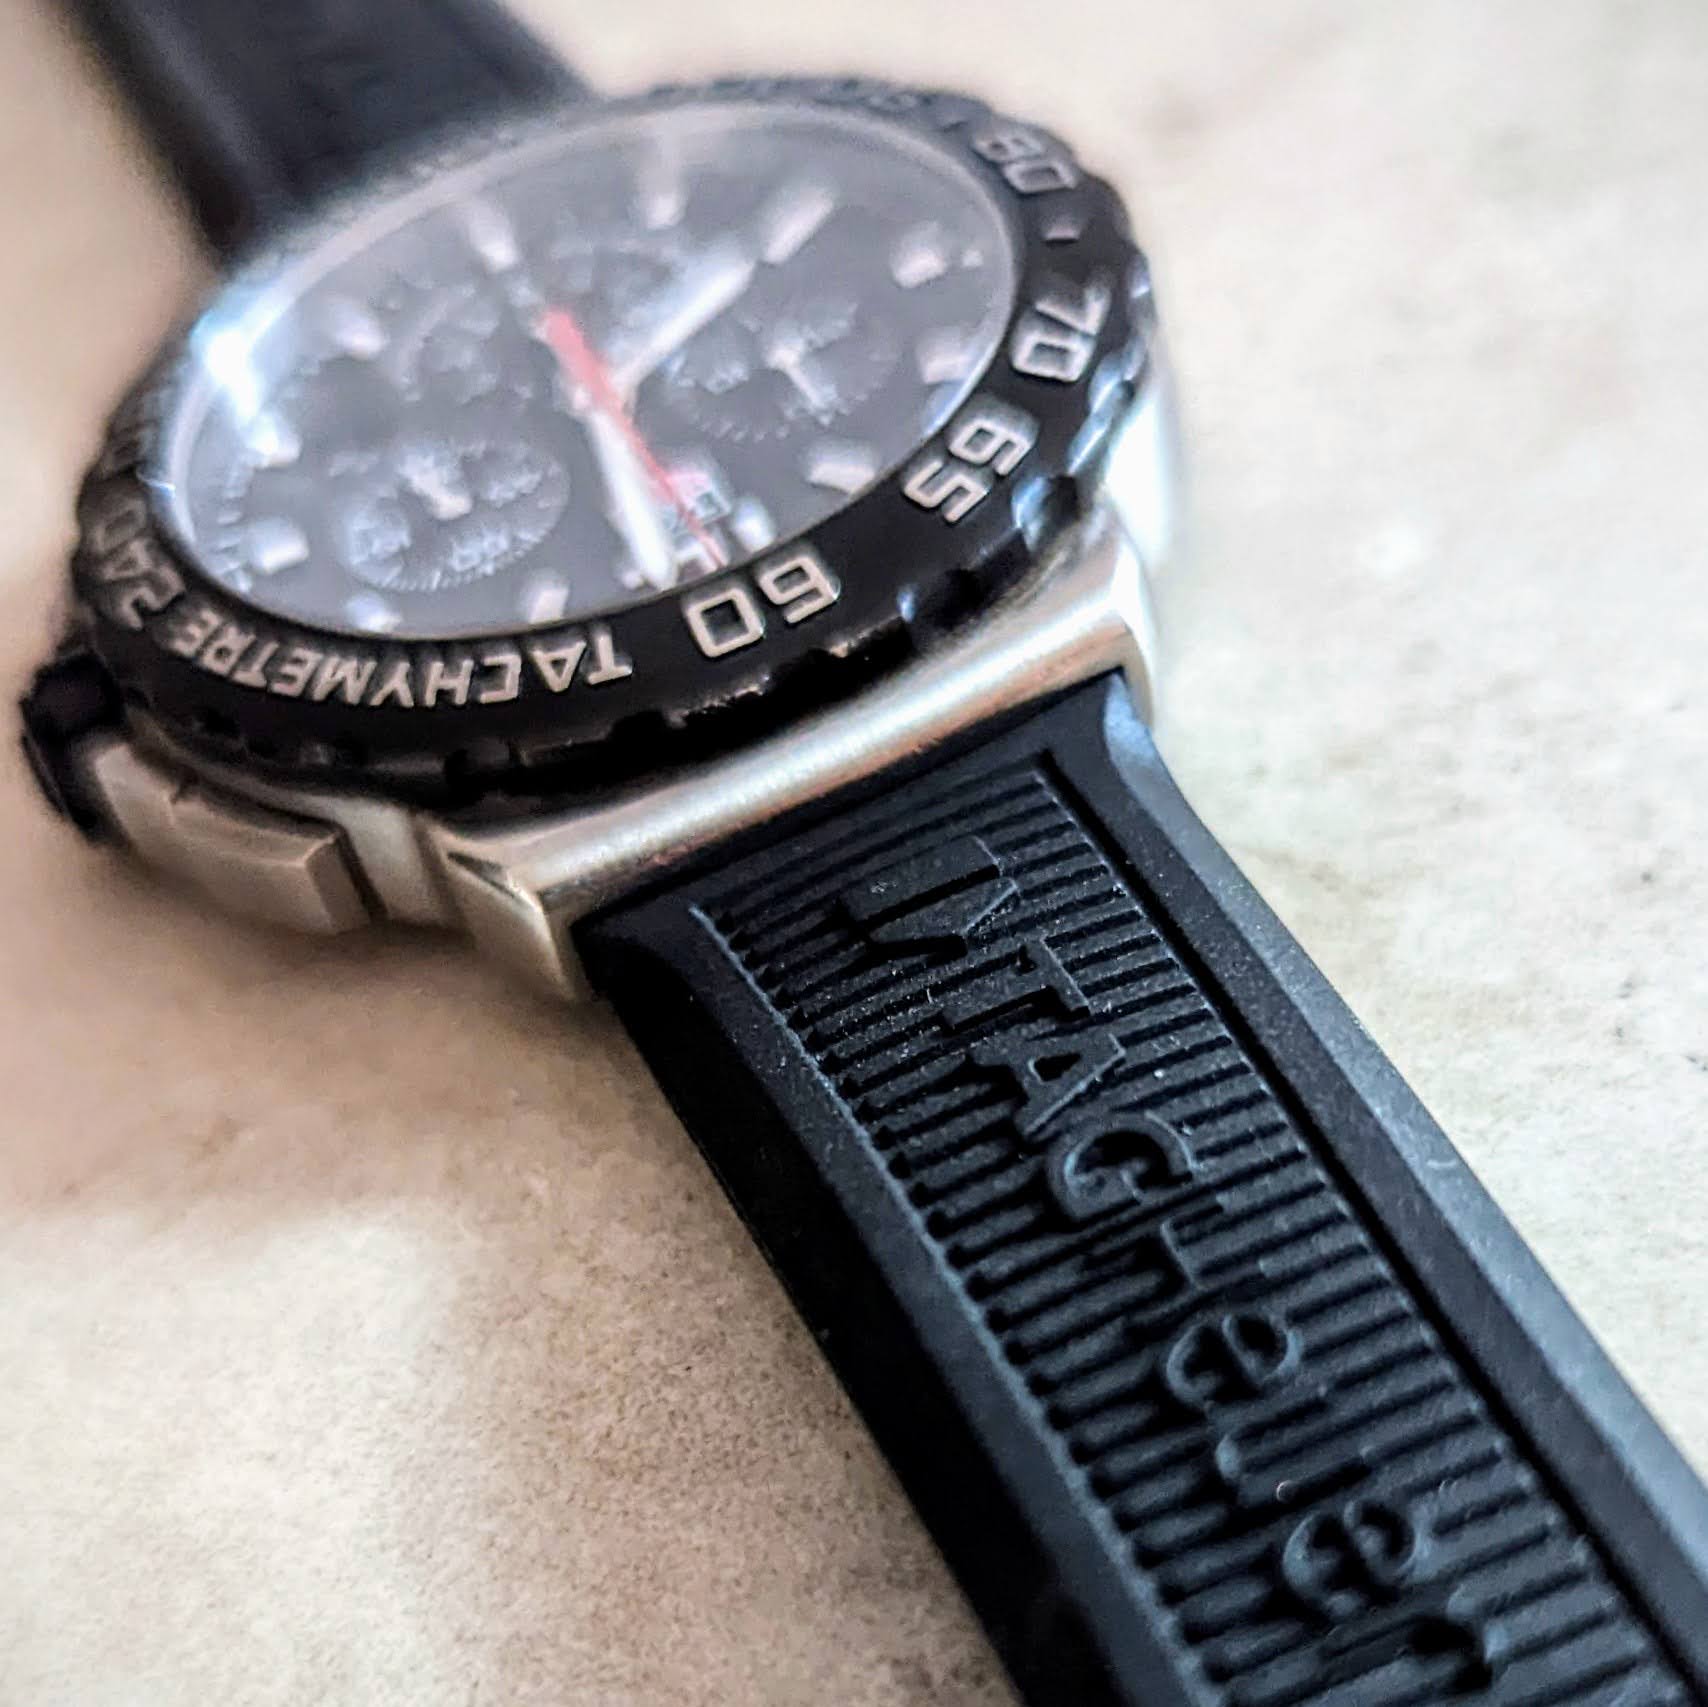 TAG HEUER Formula 1 Chronograph Watch Swiss Quartz Wristwatch